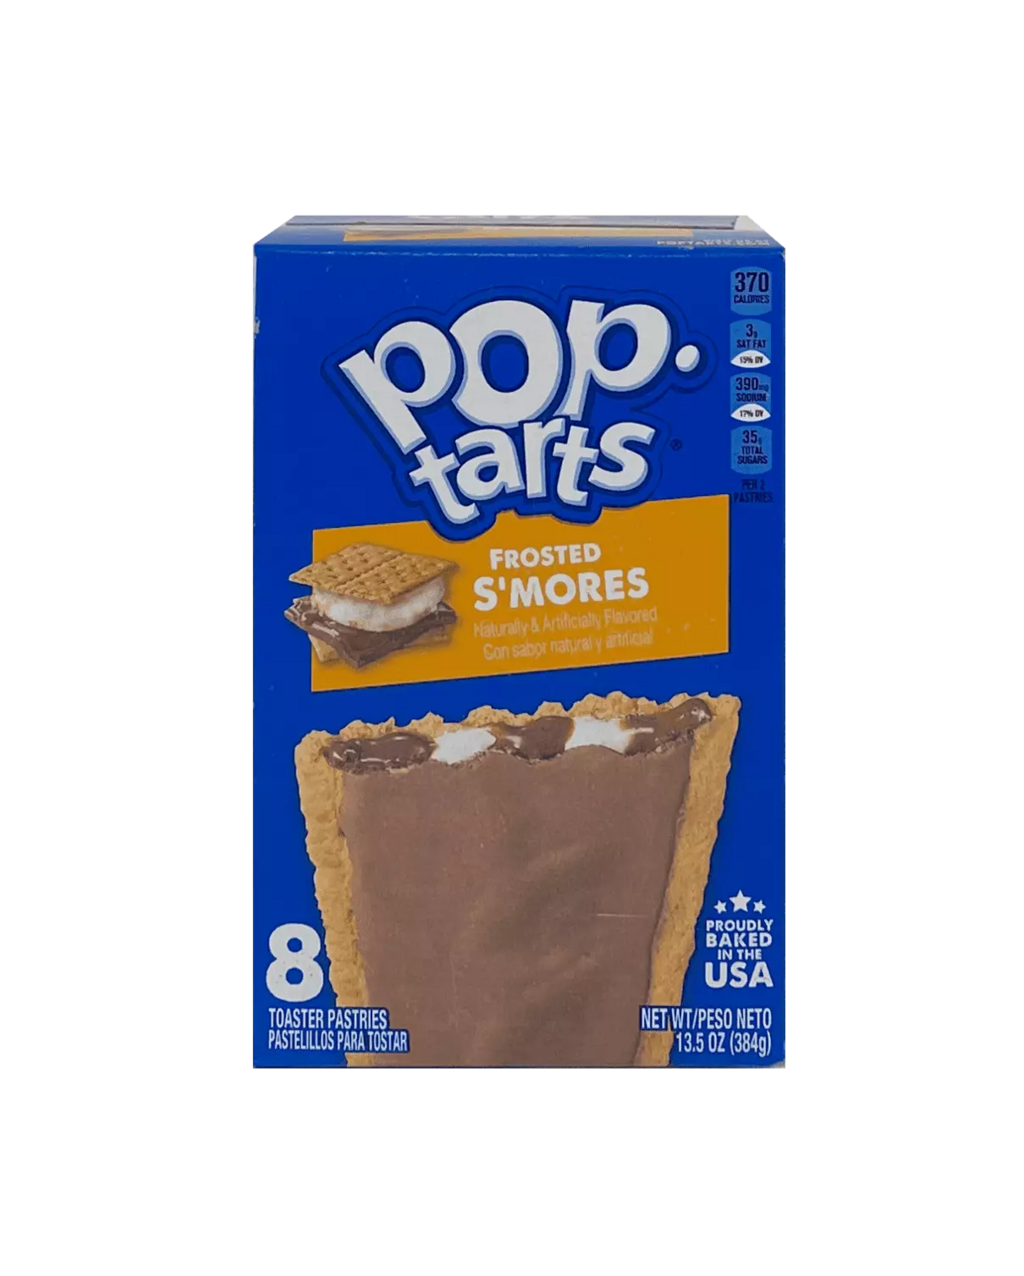 Kellogg’s Pop-tarts 家乐氏 夹心土司饼干 Smores风味 383g 美国  Kellogg's